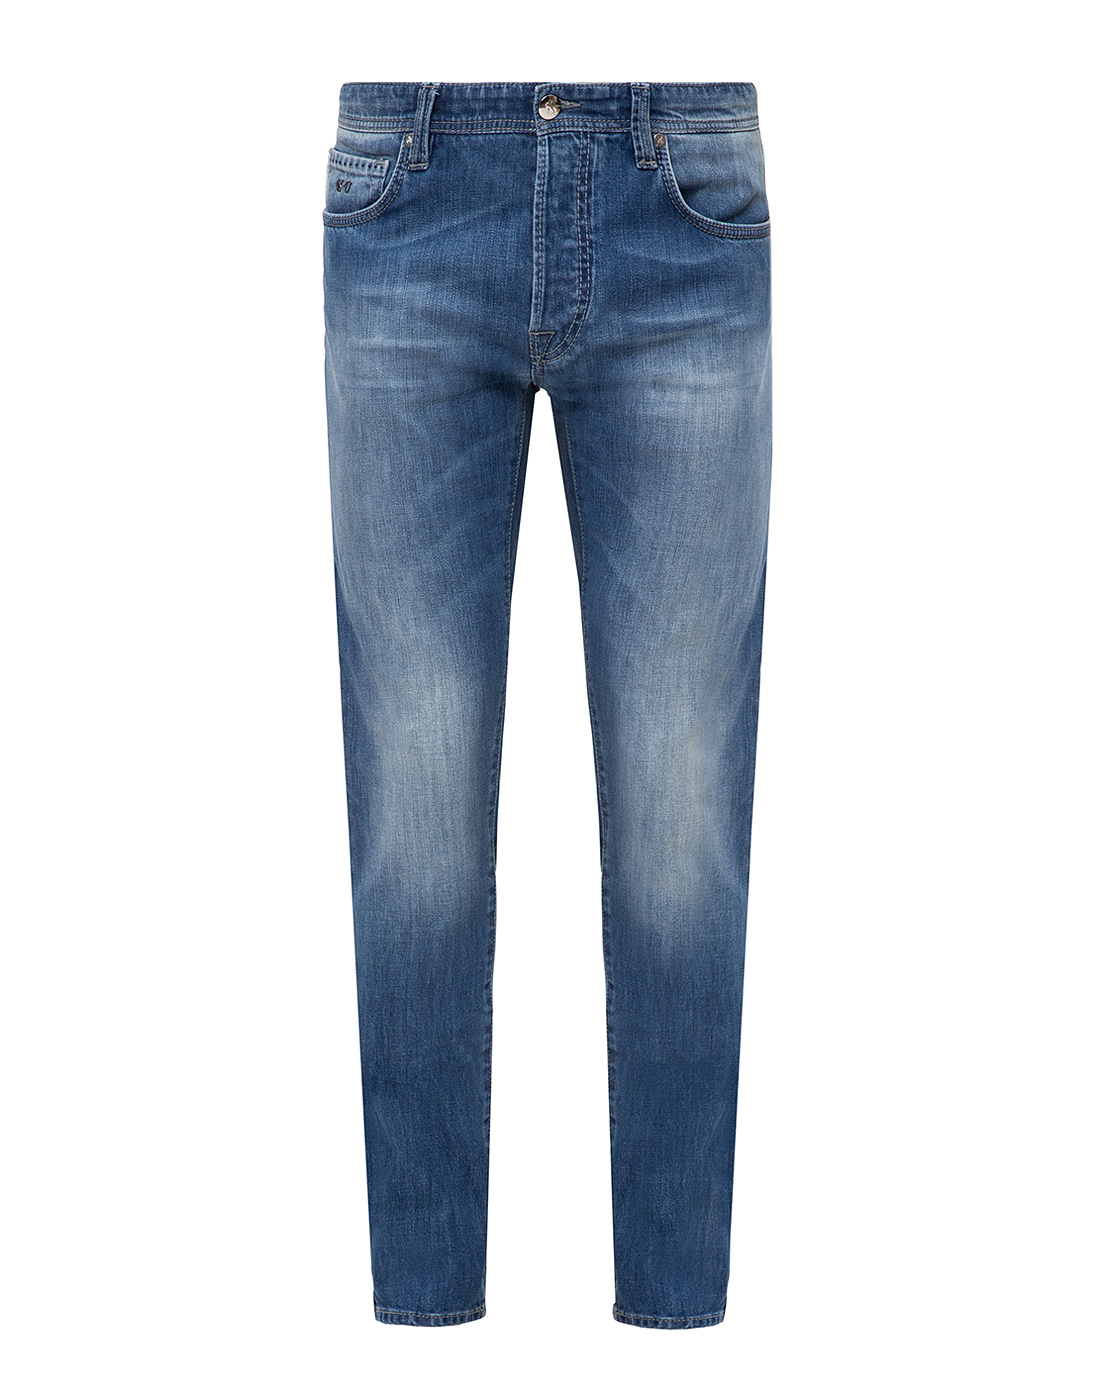 Мужские синие джинсы Tramarossa SD214S SS19-1